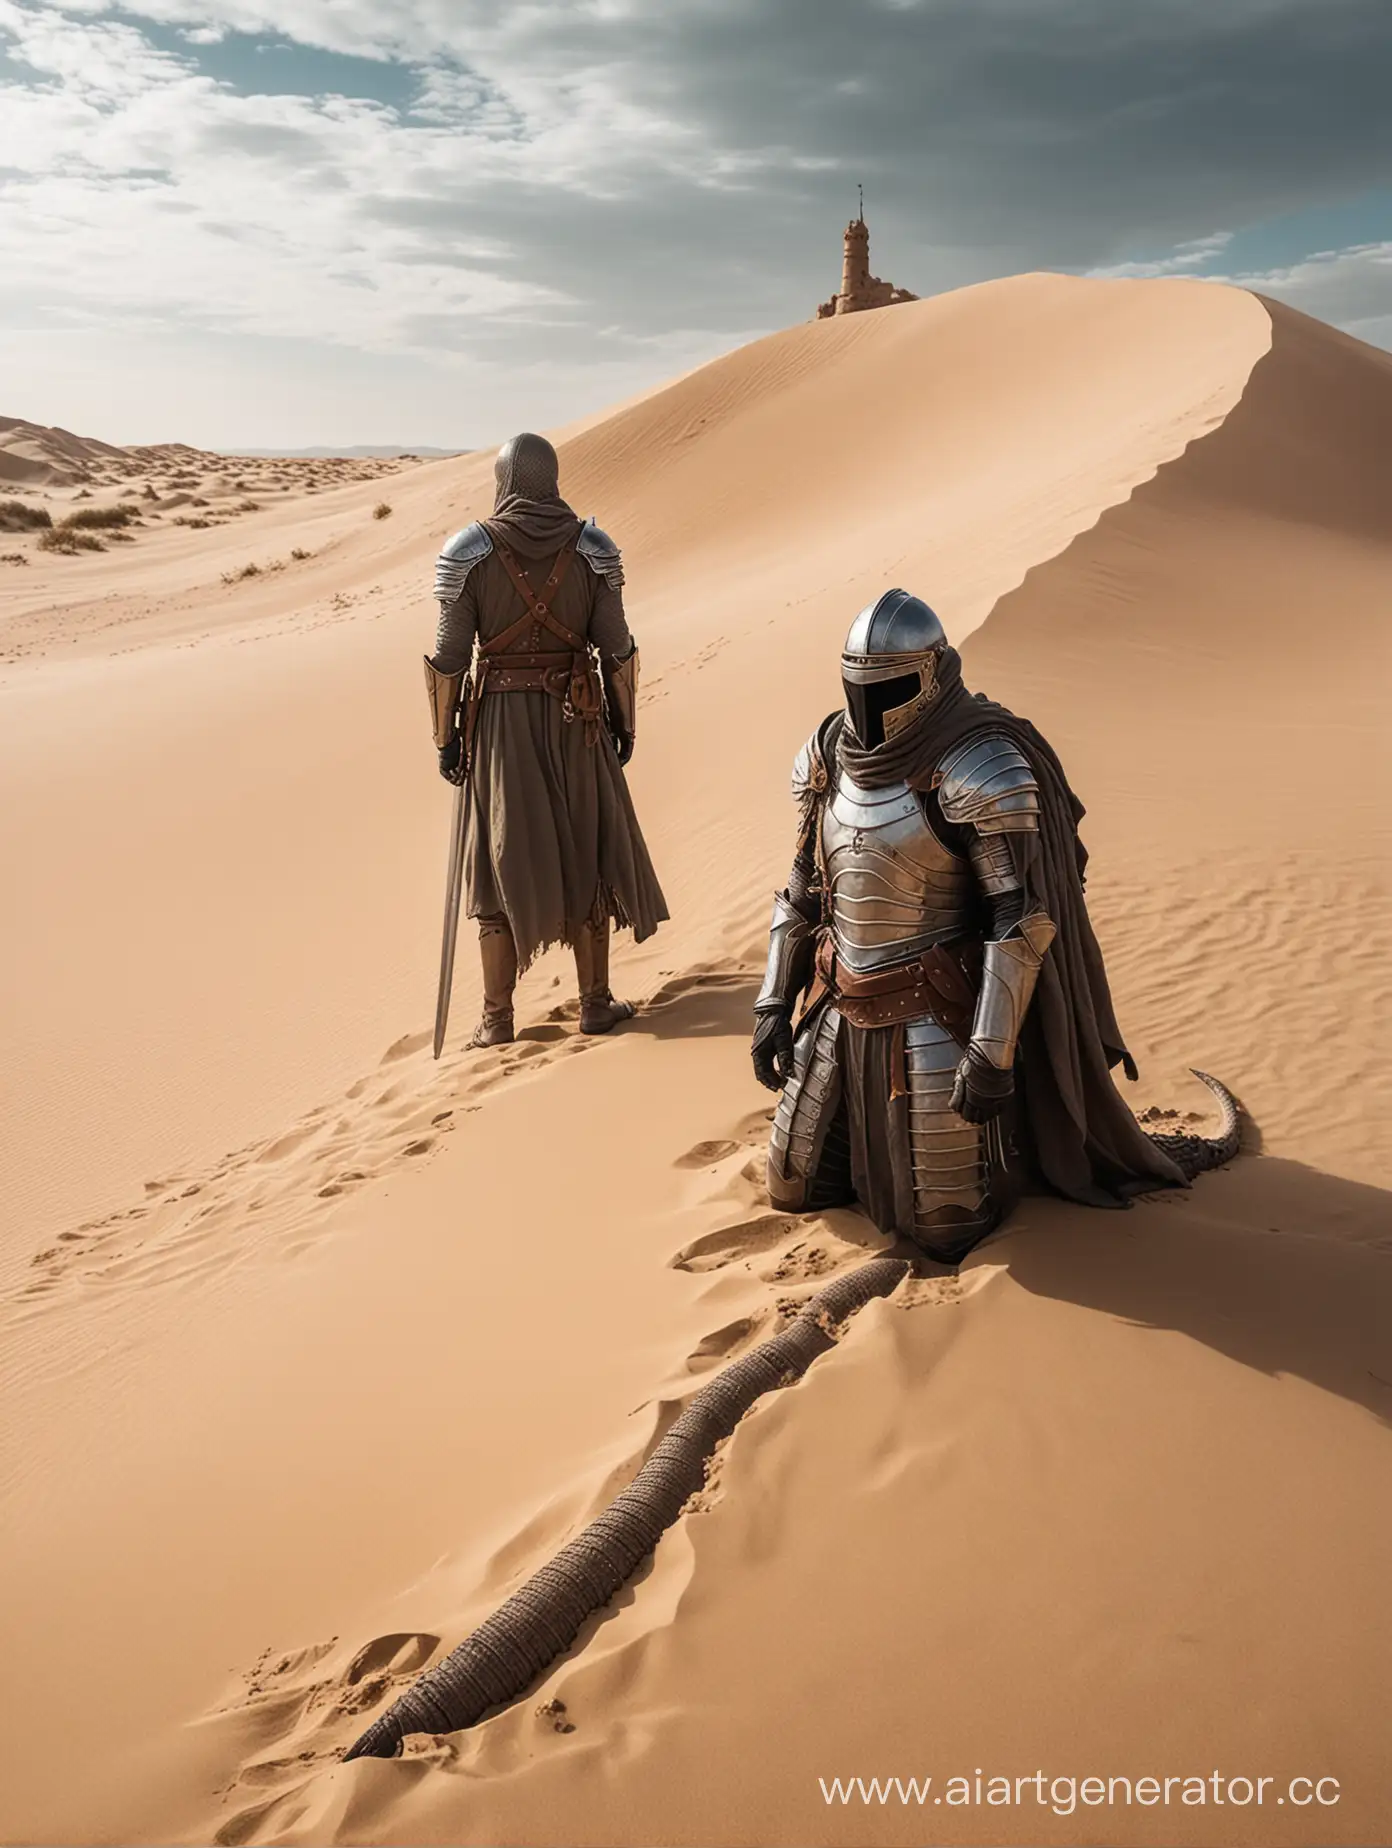 Knight-Confronts-Gigantic-Worm-in-Desert-Landscape